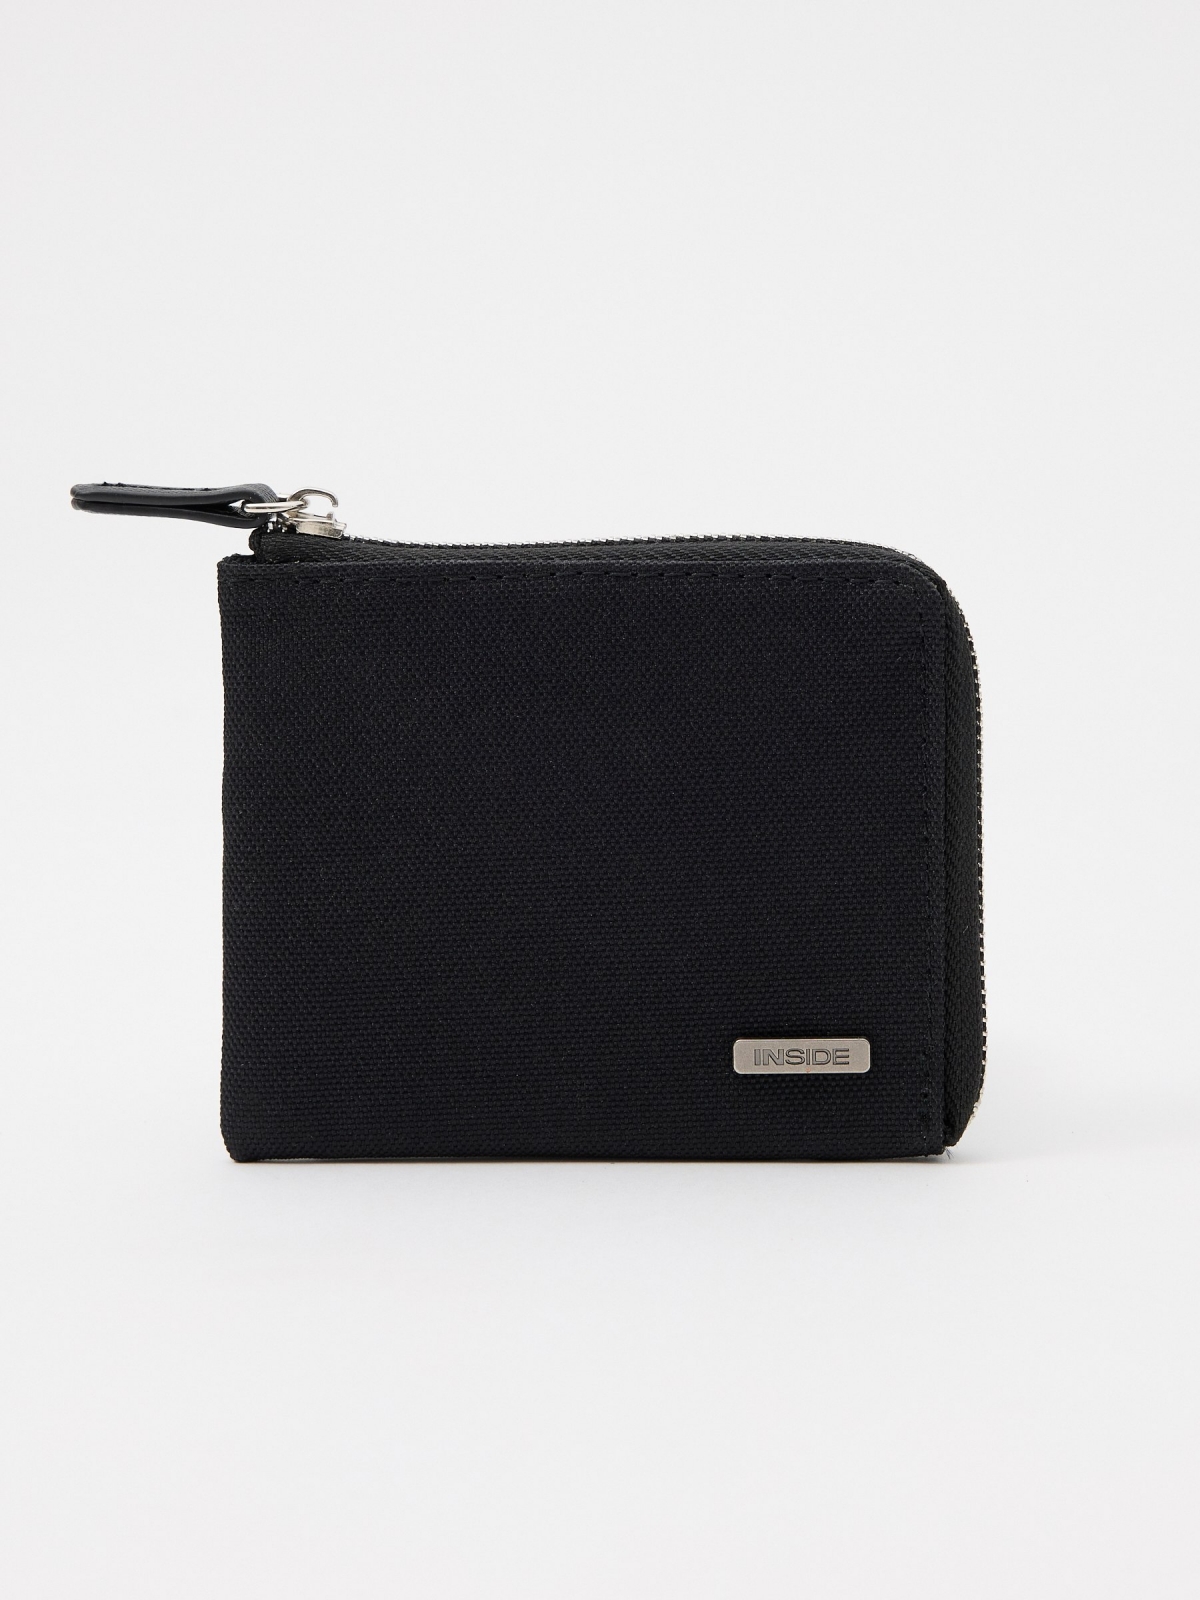 Black canvas purse